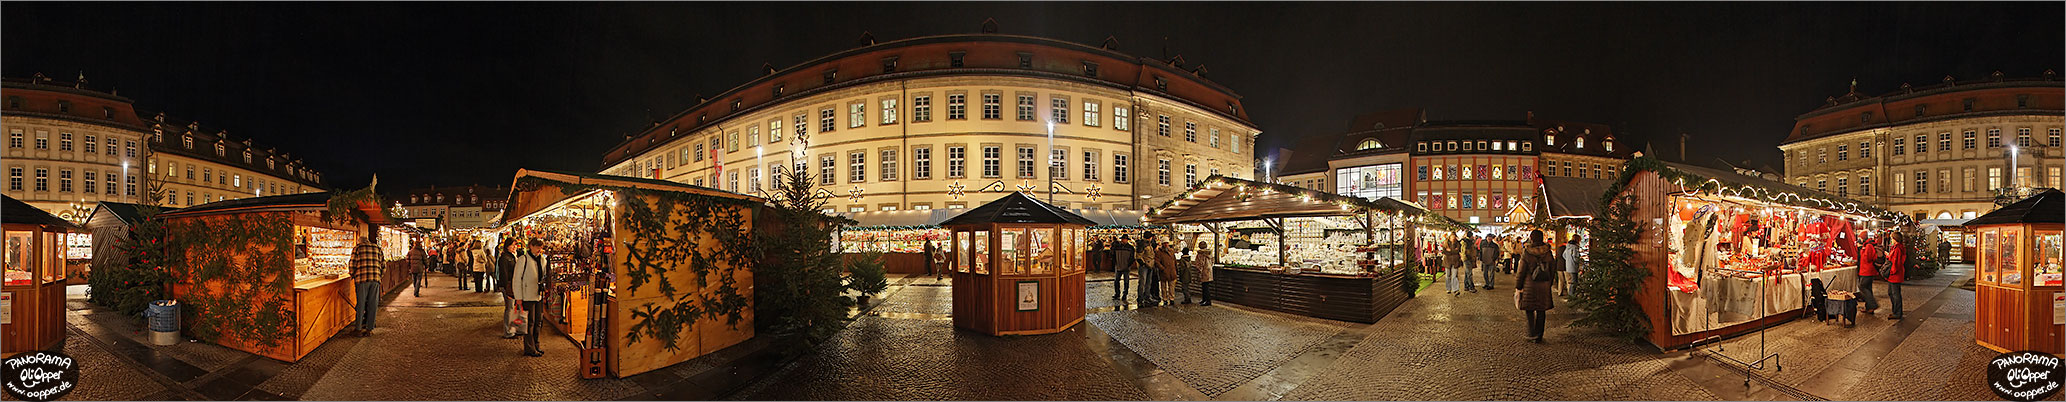 Weihnachtsmarkt Bamberg - Maximiliansplatz - p014 - (c) by Oliver Opper